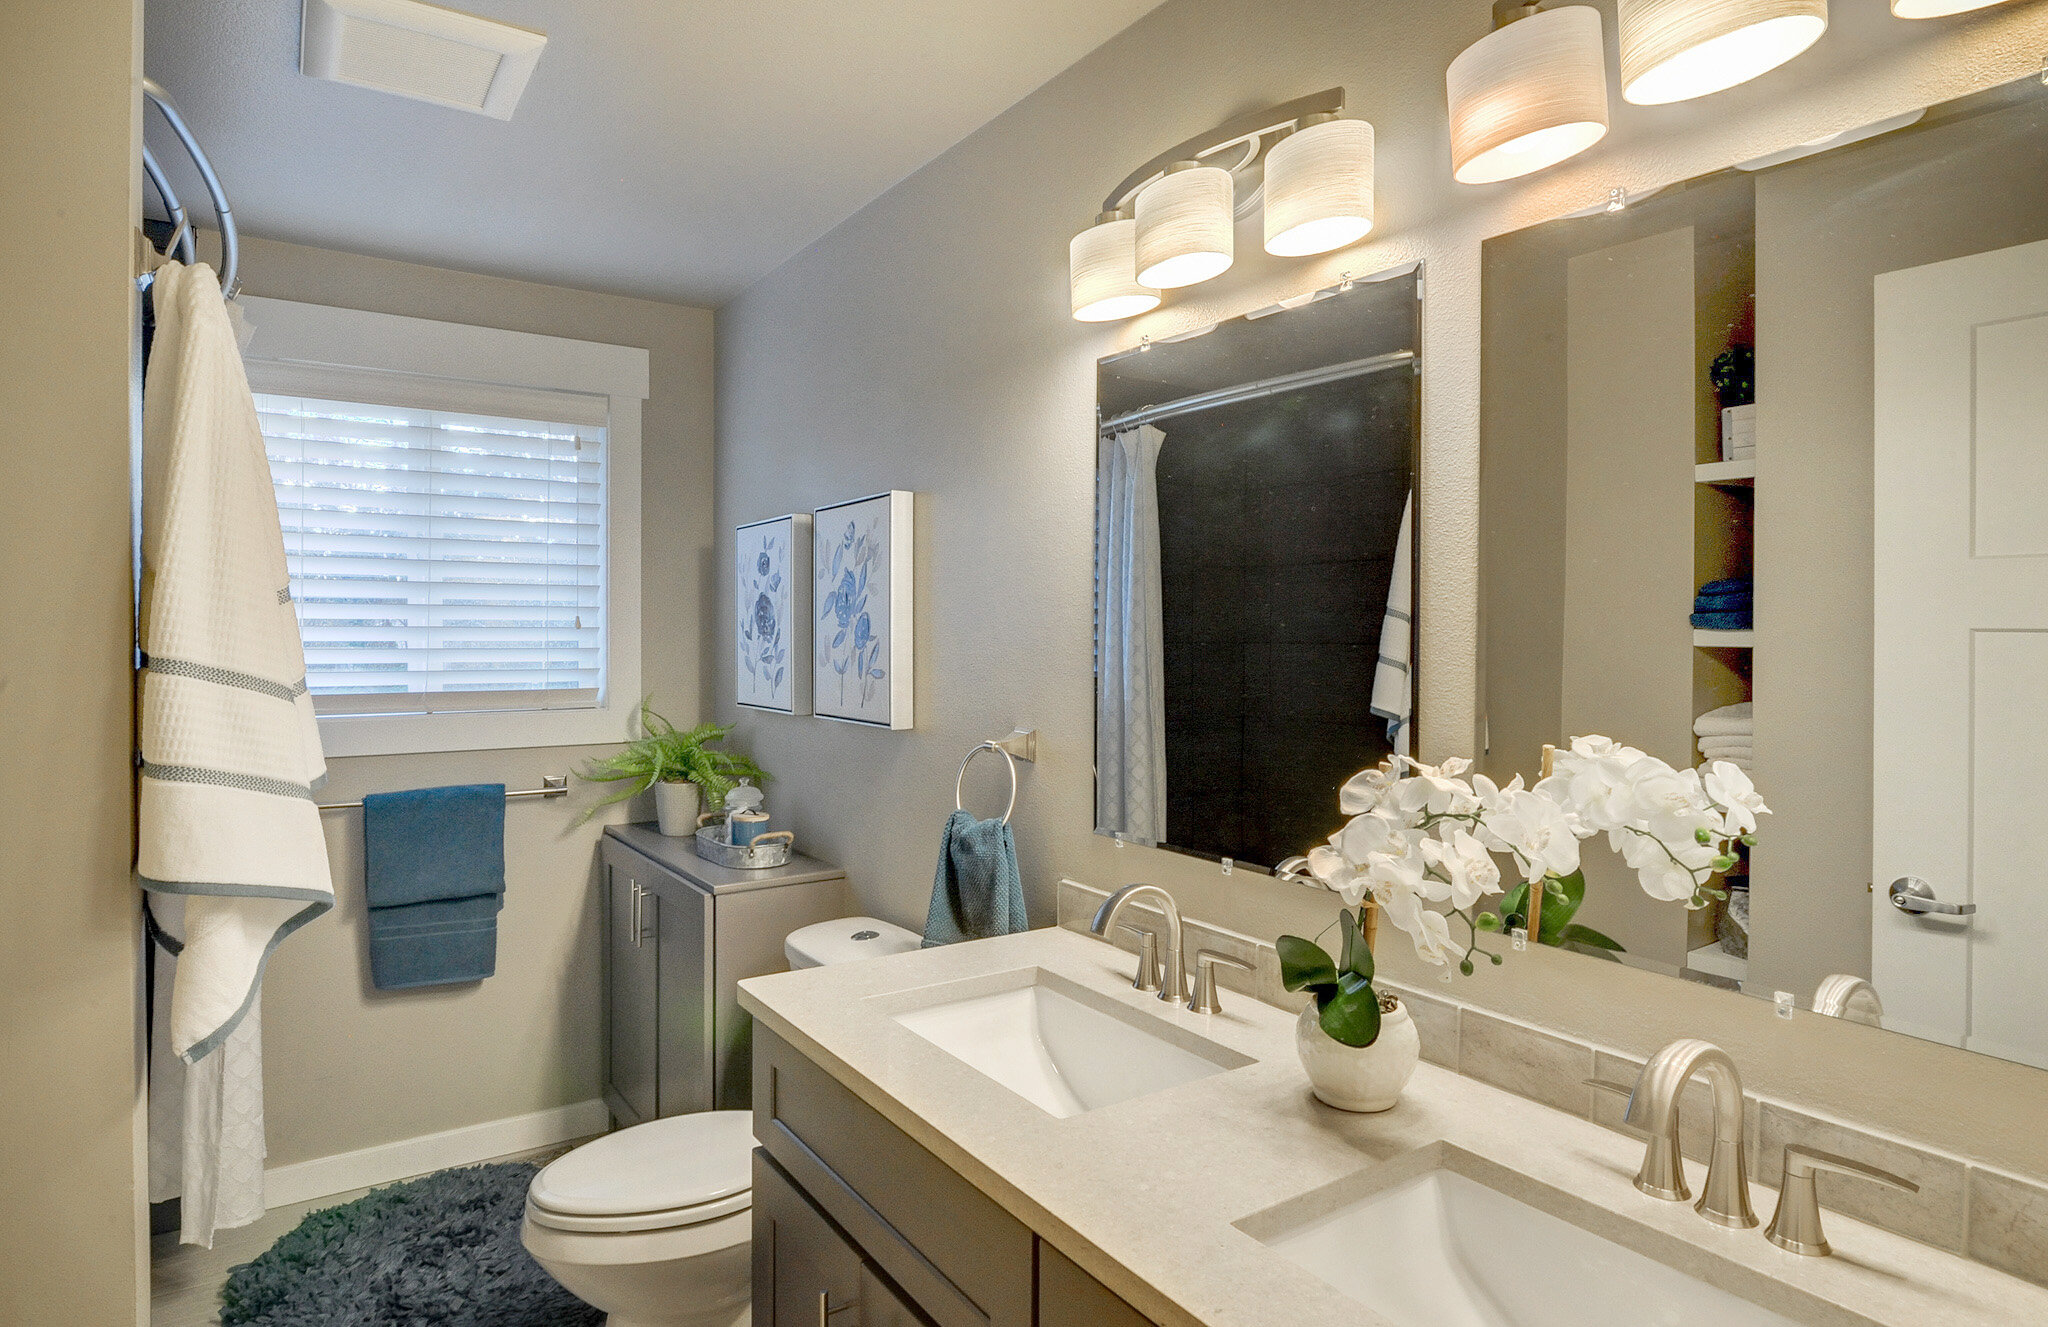 Bathrooms offer Tiled Floors + Shower Surrounds (Copy)